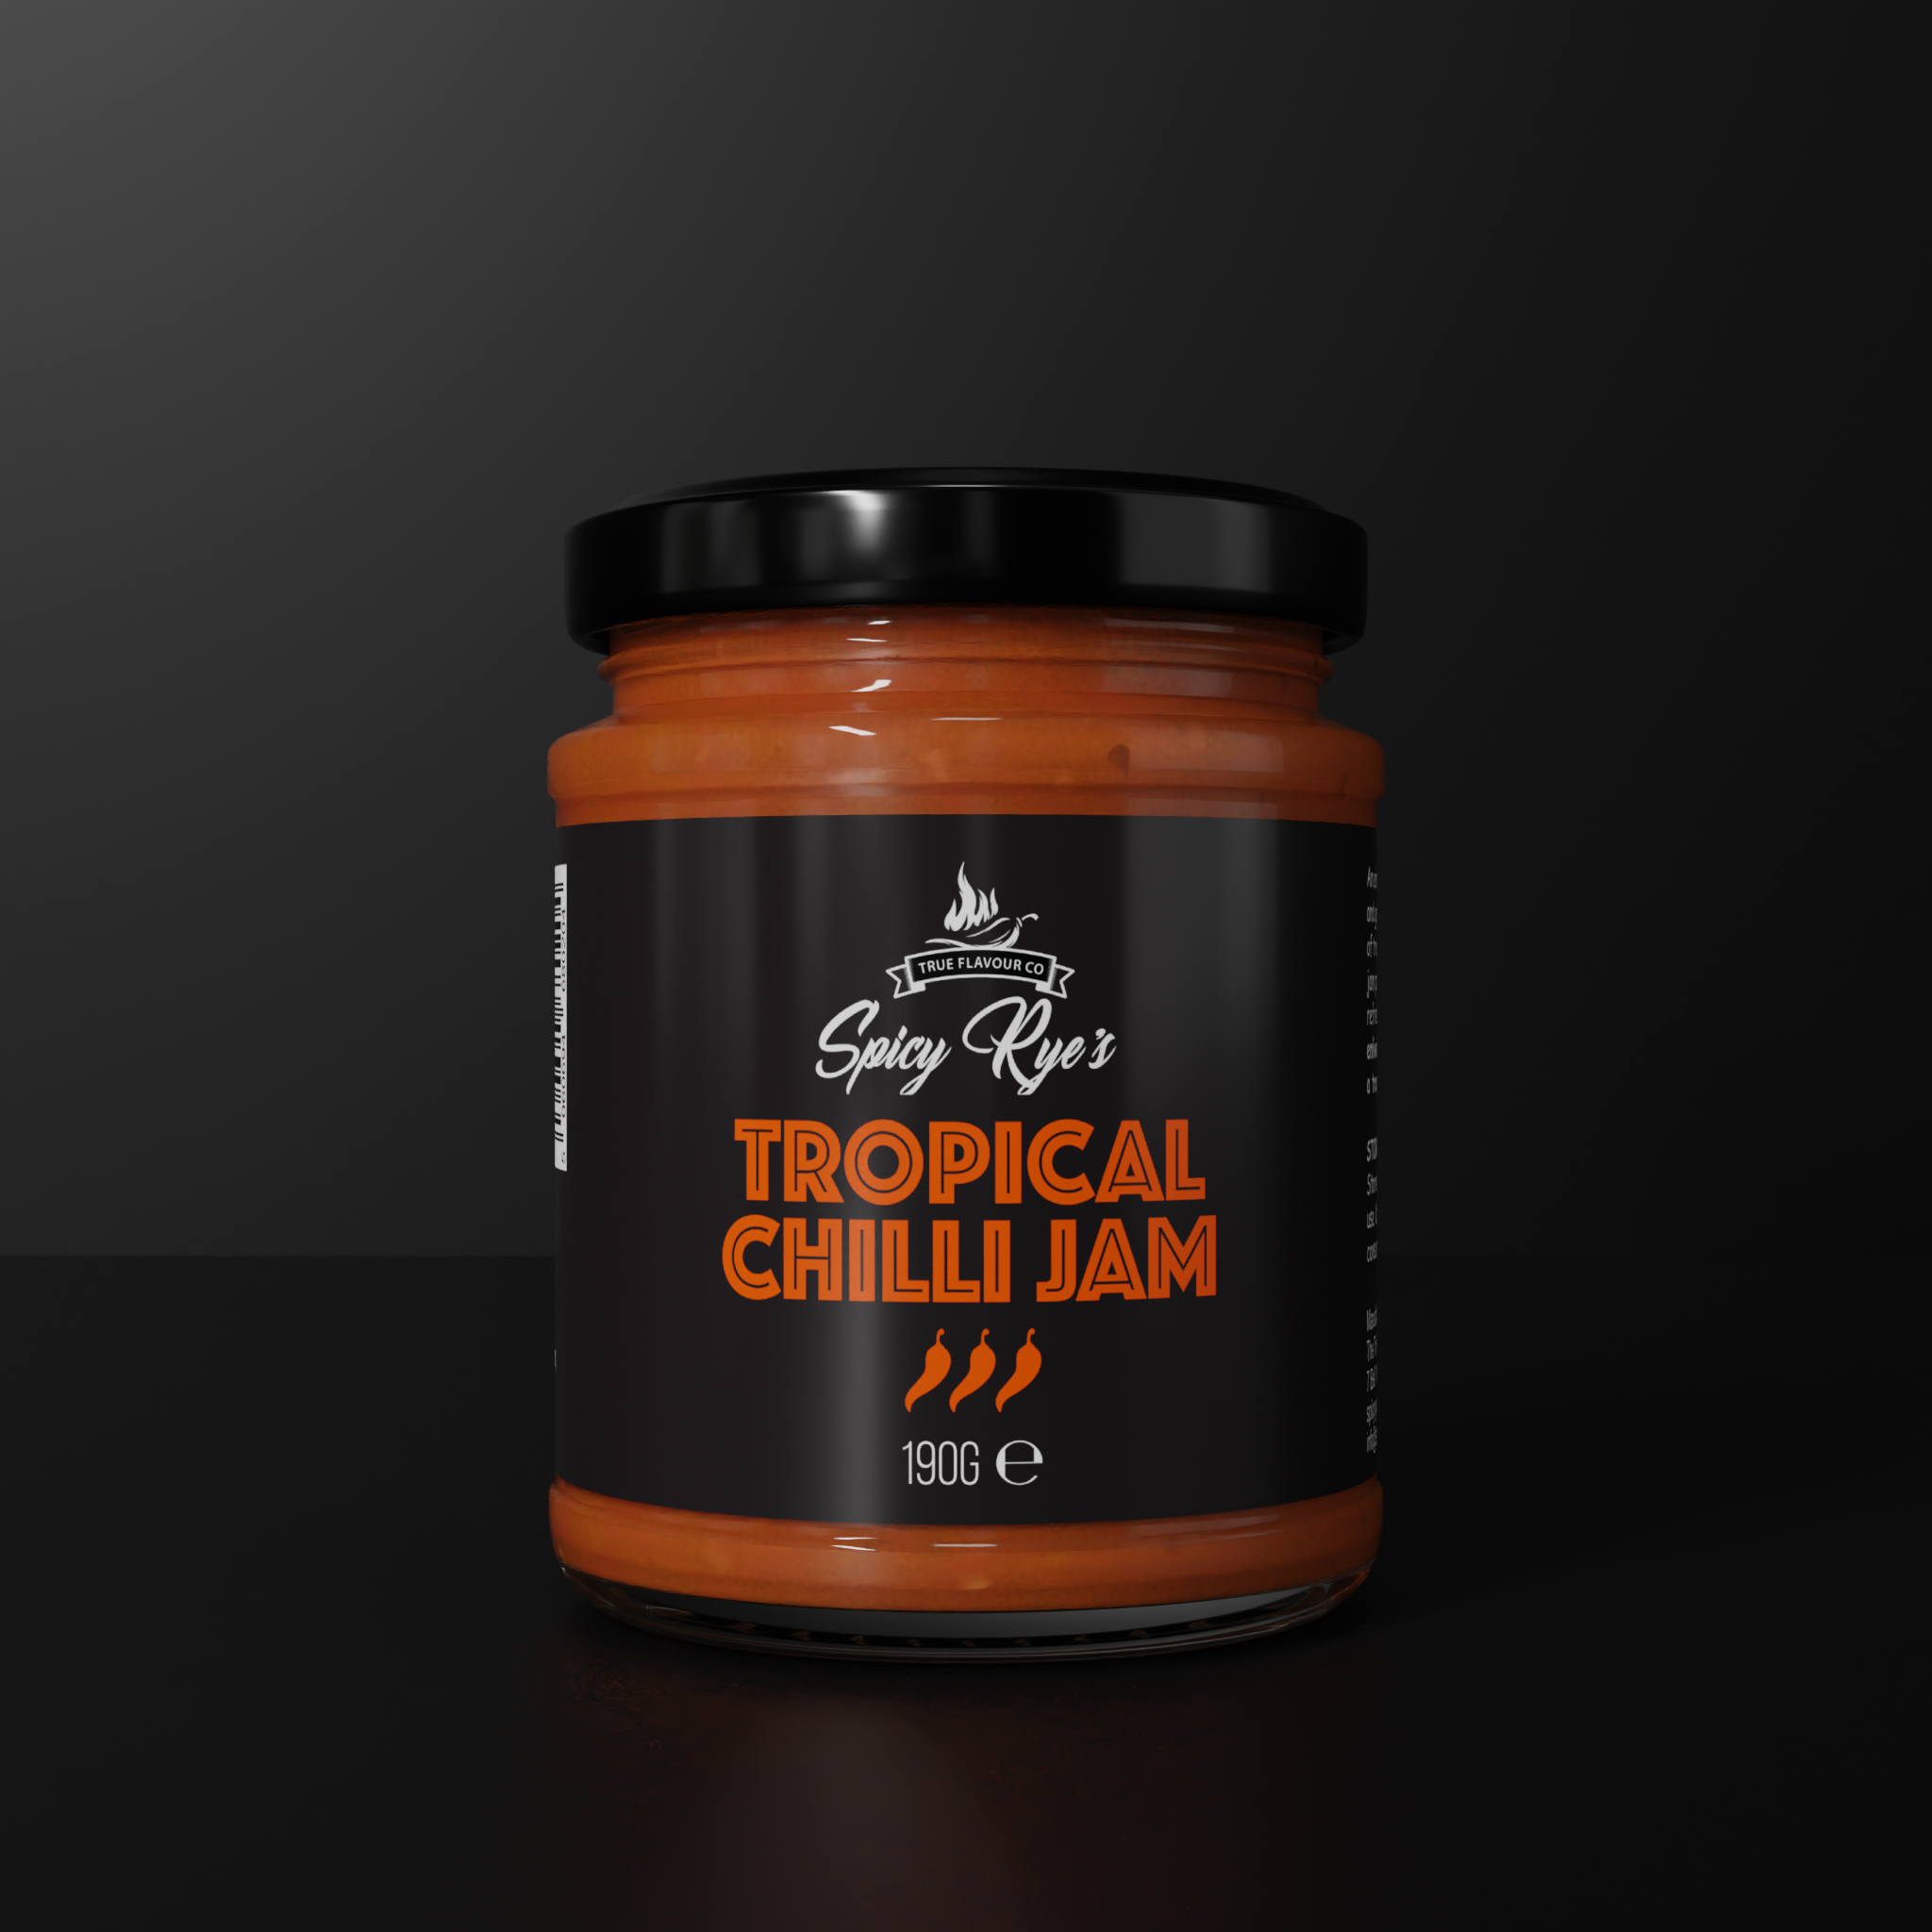 Tropical Chilli Jam